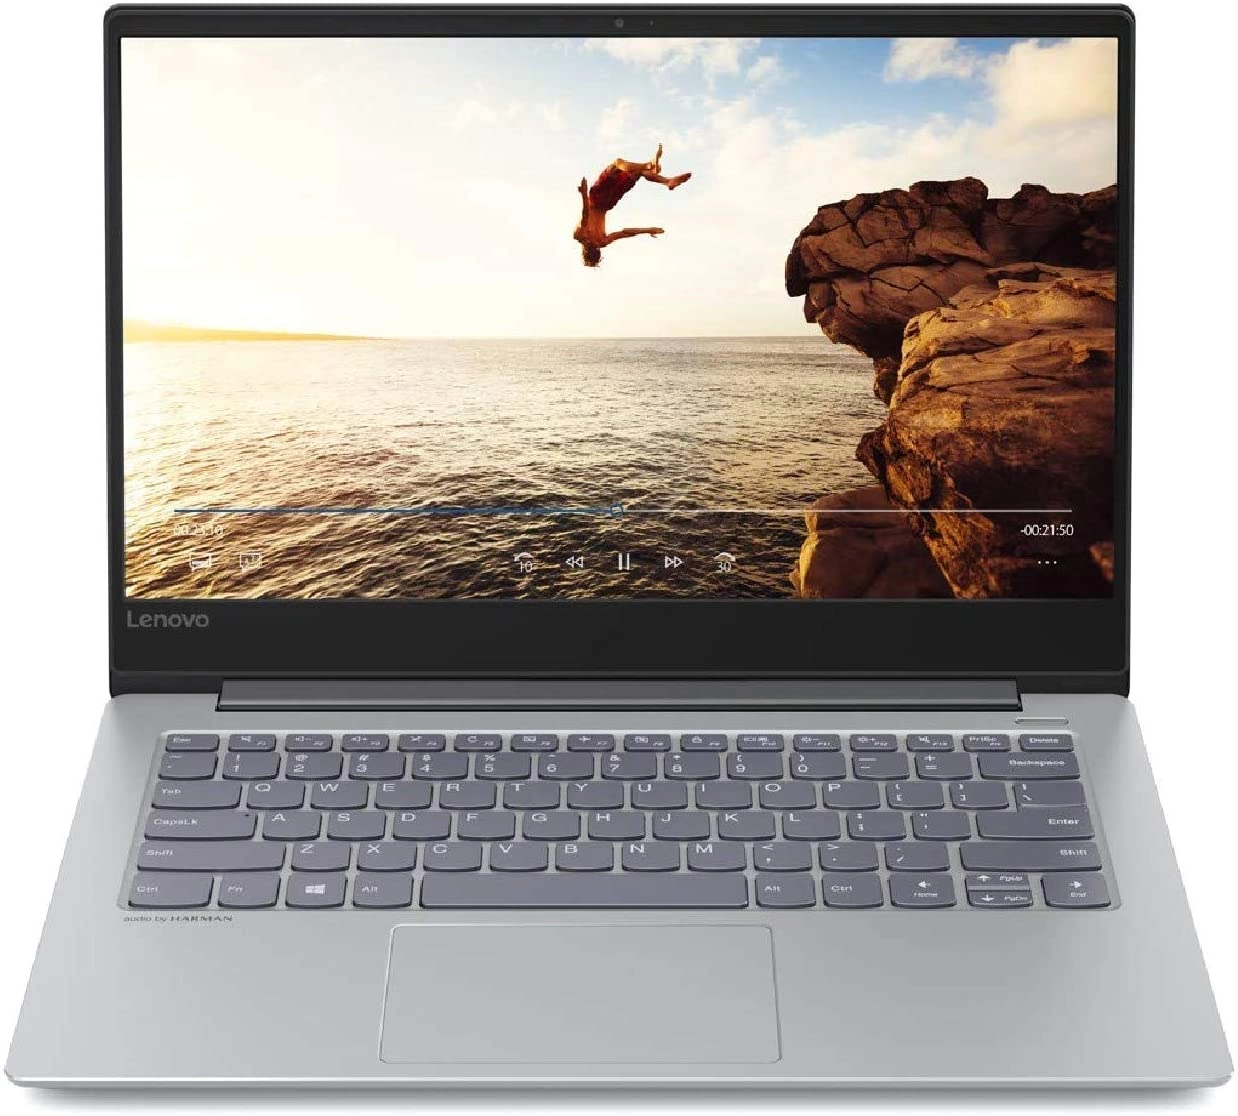 Lenovo Ideapad 530S Intel laptop image